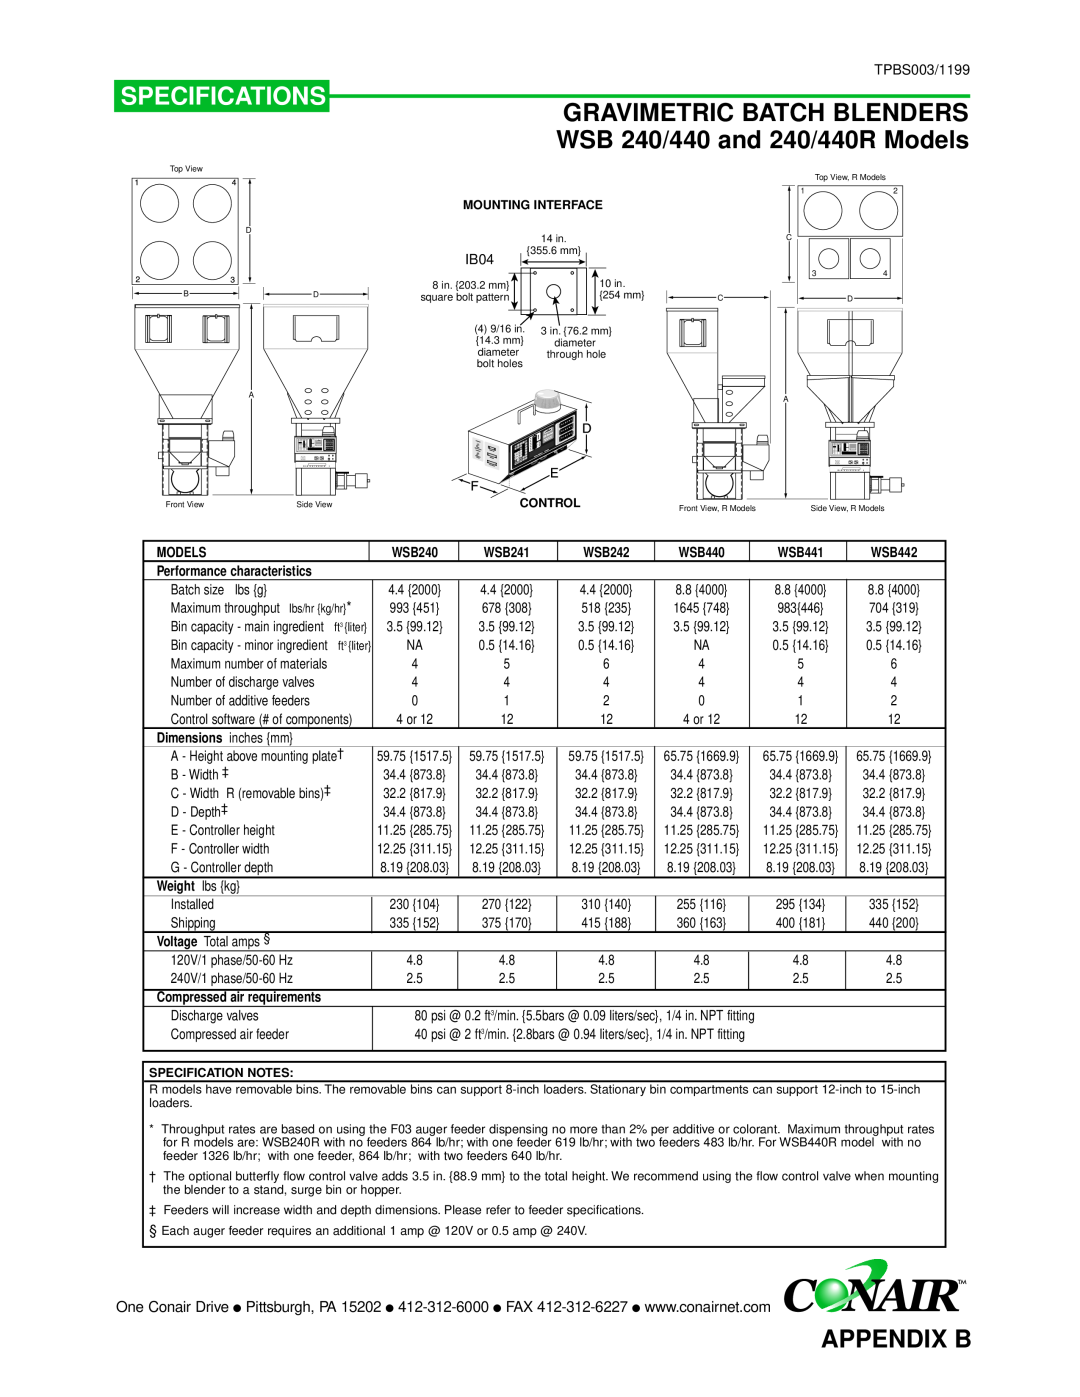 Conair GB manual Specifications, Appendix B, Models, WSB442, Dimensions inches mm 